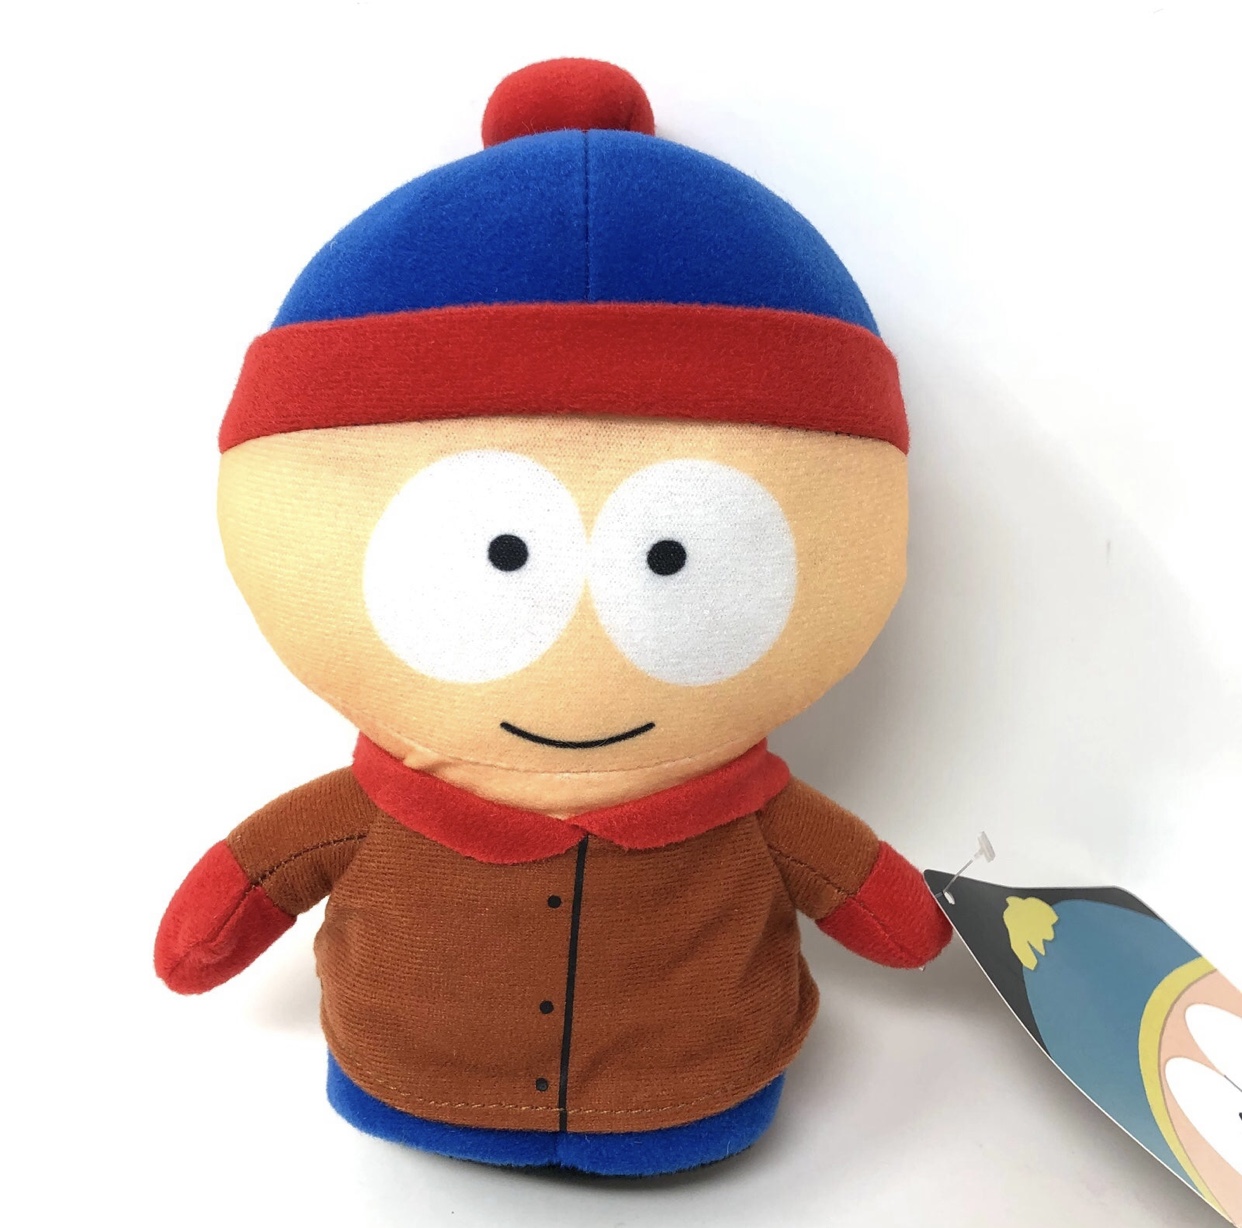 Plush Comedy Central: Explore the South Park Plush Toy Universe